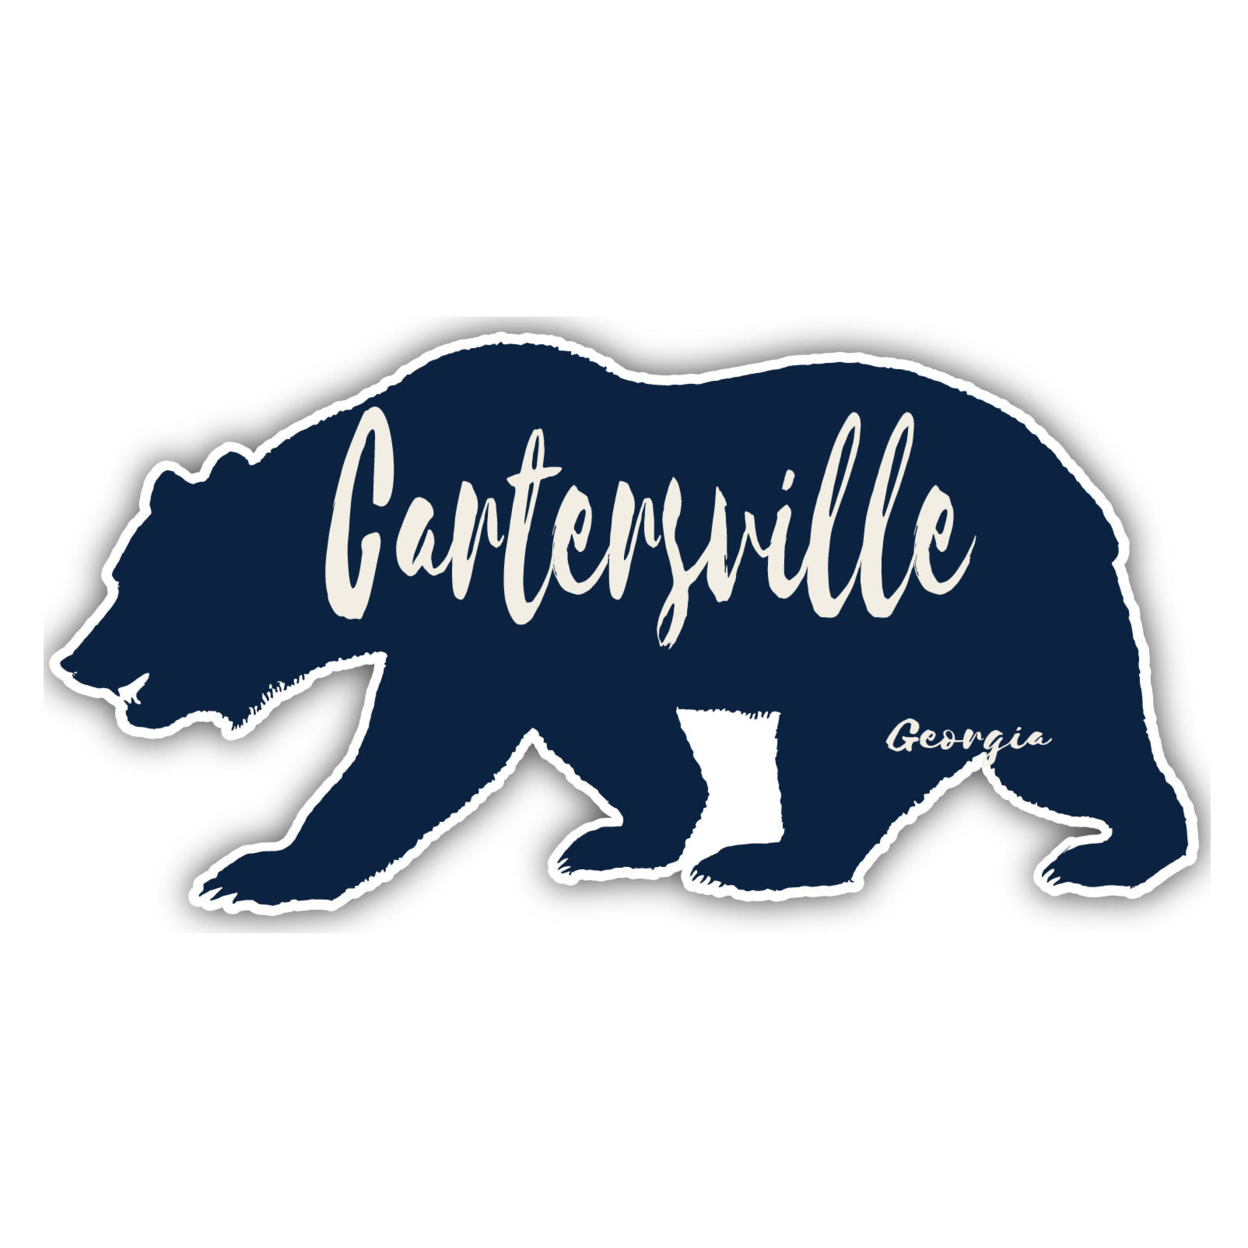 Cartersville Georgia Souvenir Decorative Stickers (Choose Theme And Size) - 4-Pack, 6-Inch, Bear